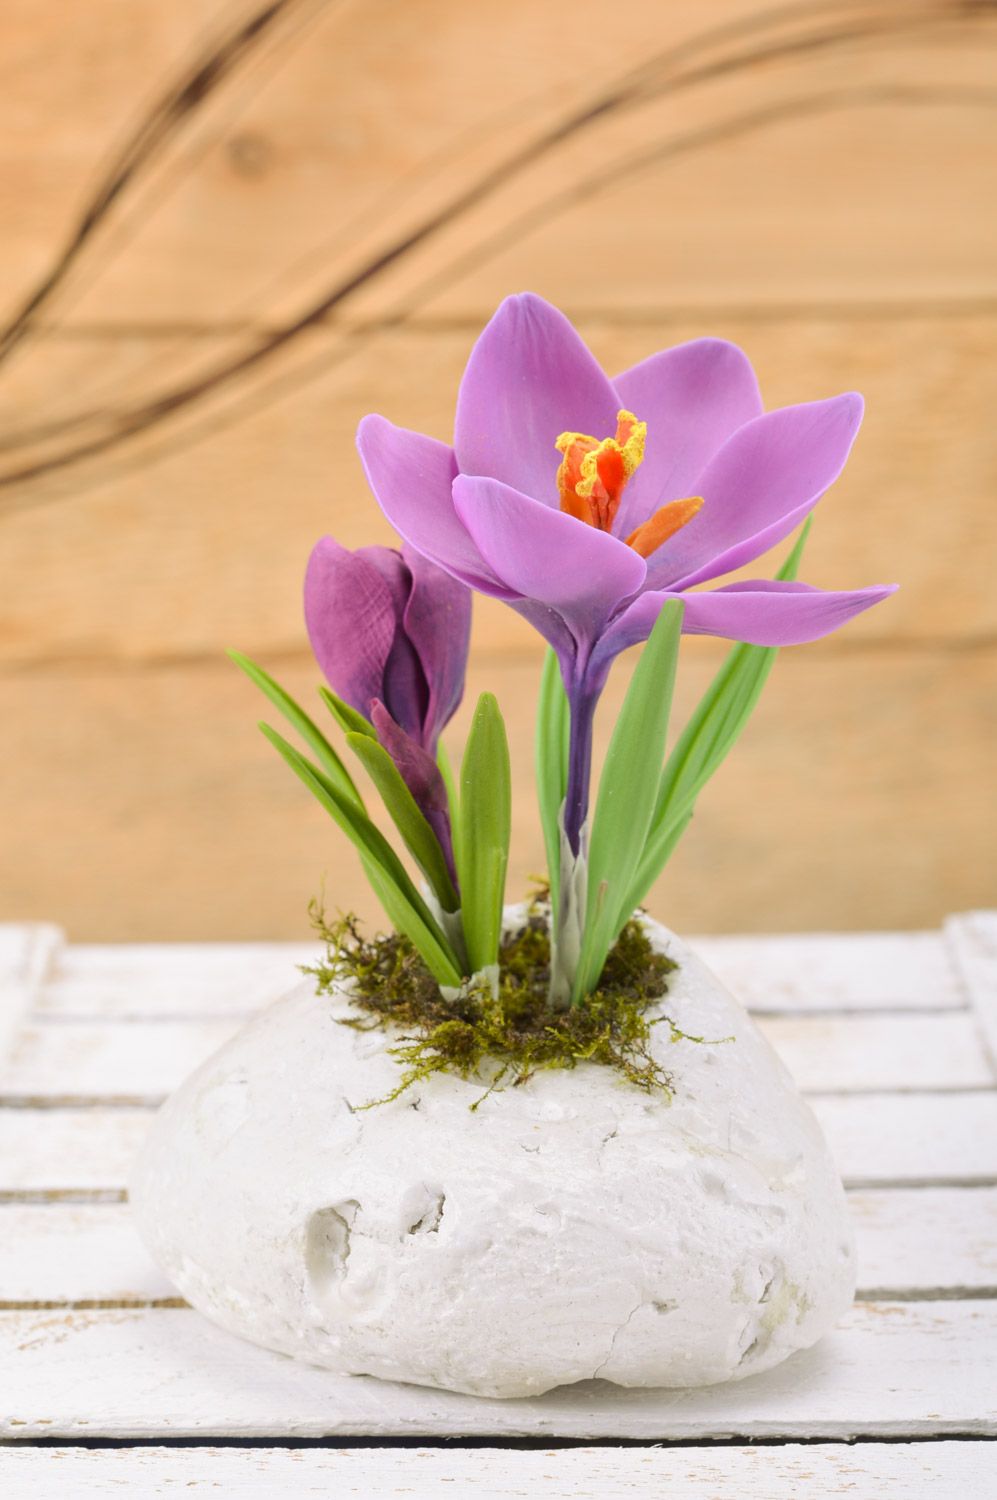 Handmade artificial violet crocus flower molded of polymer clay interior decor photo 1